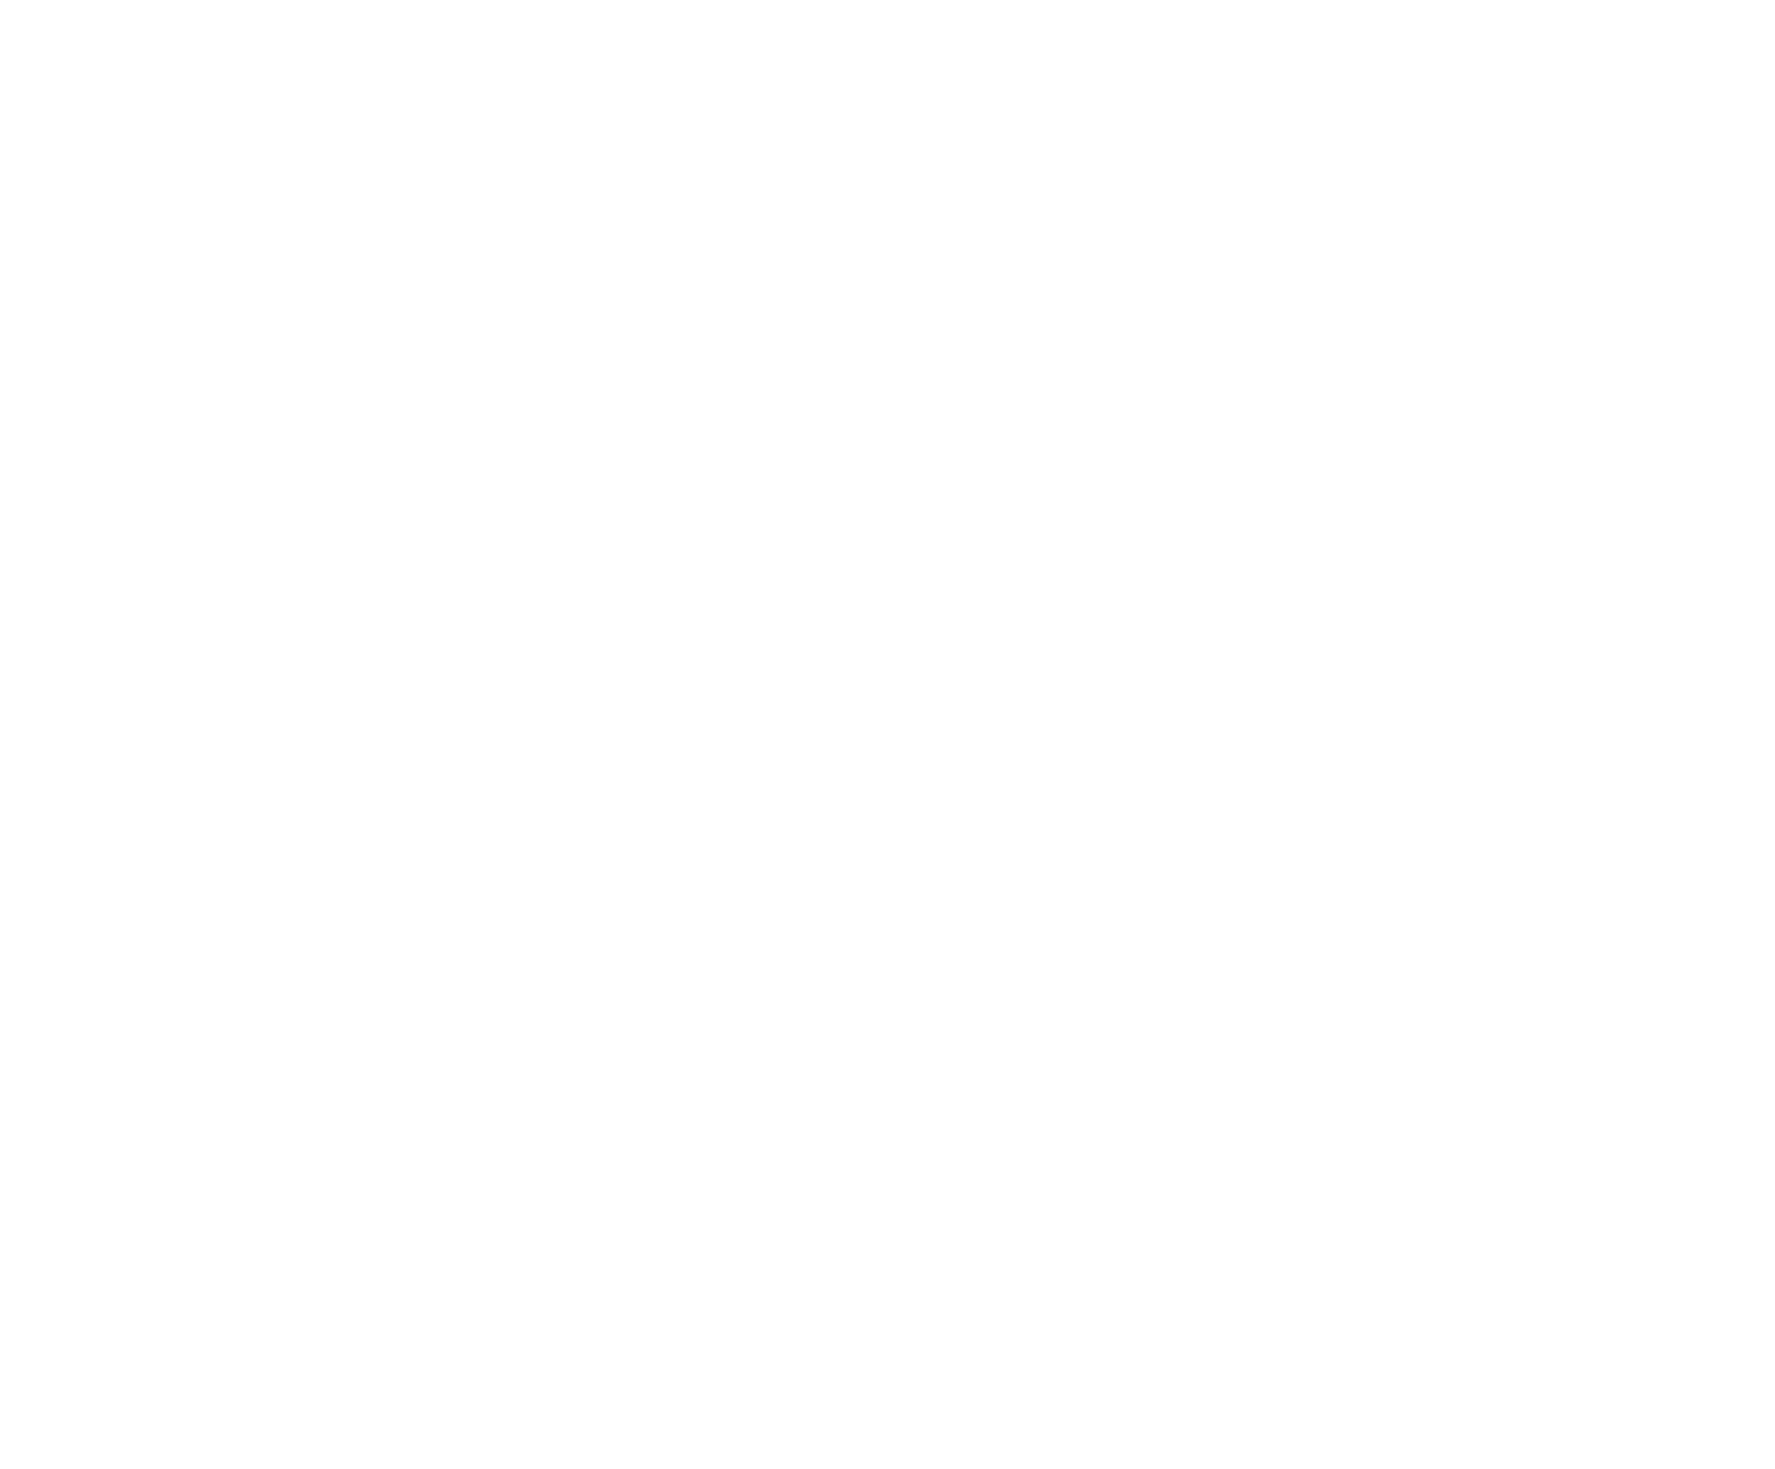 Genetic Resources